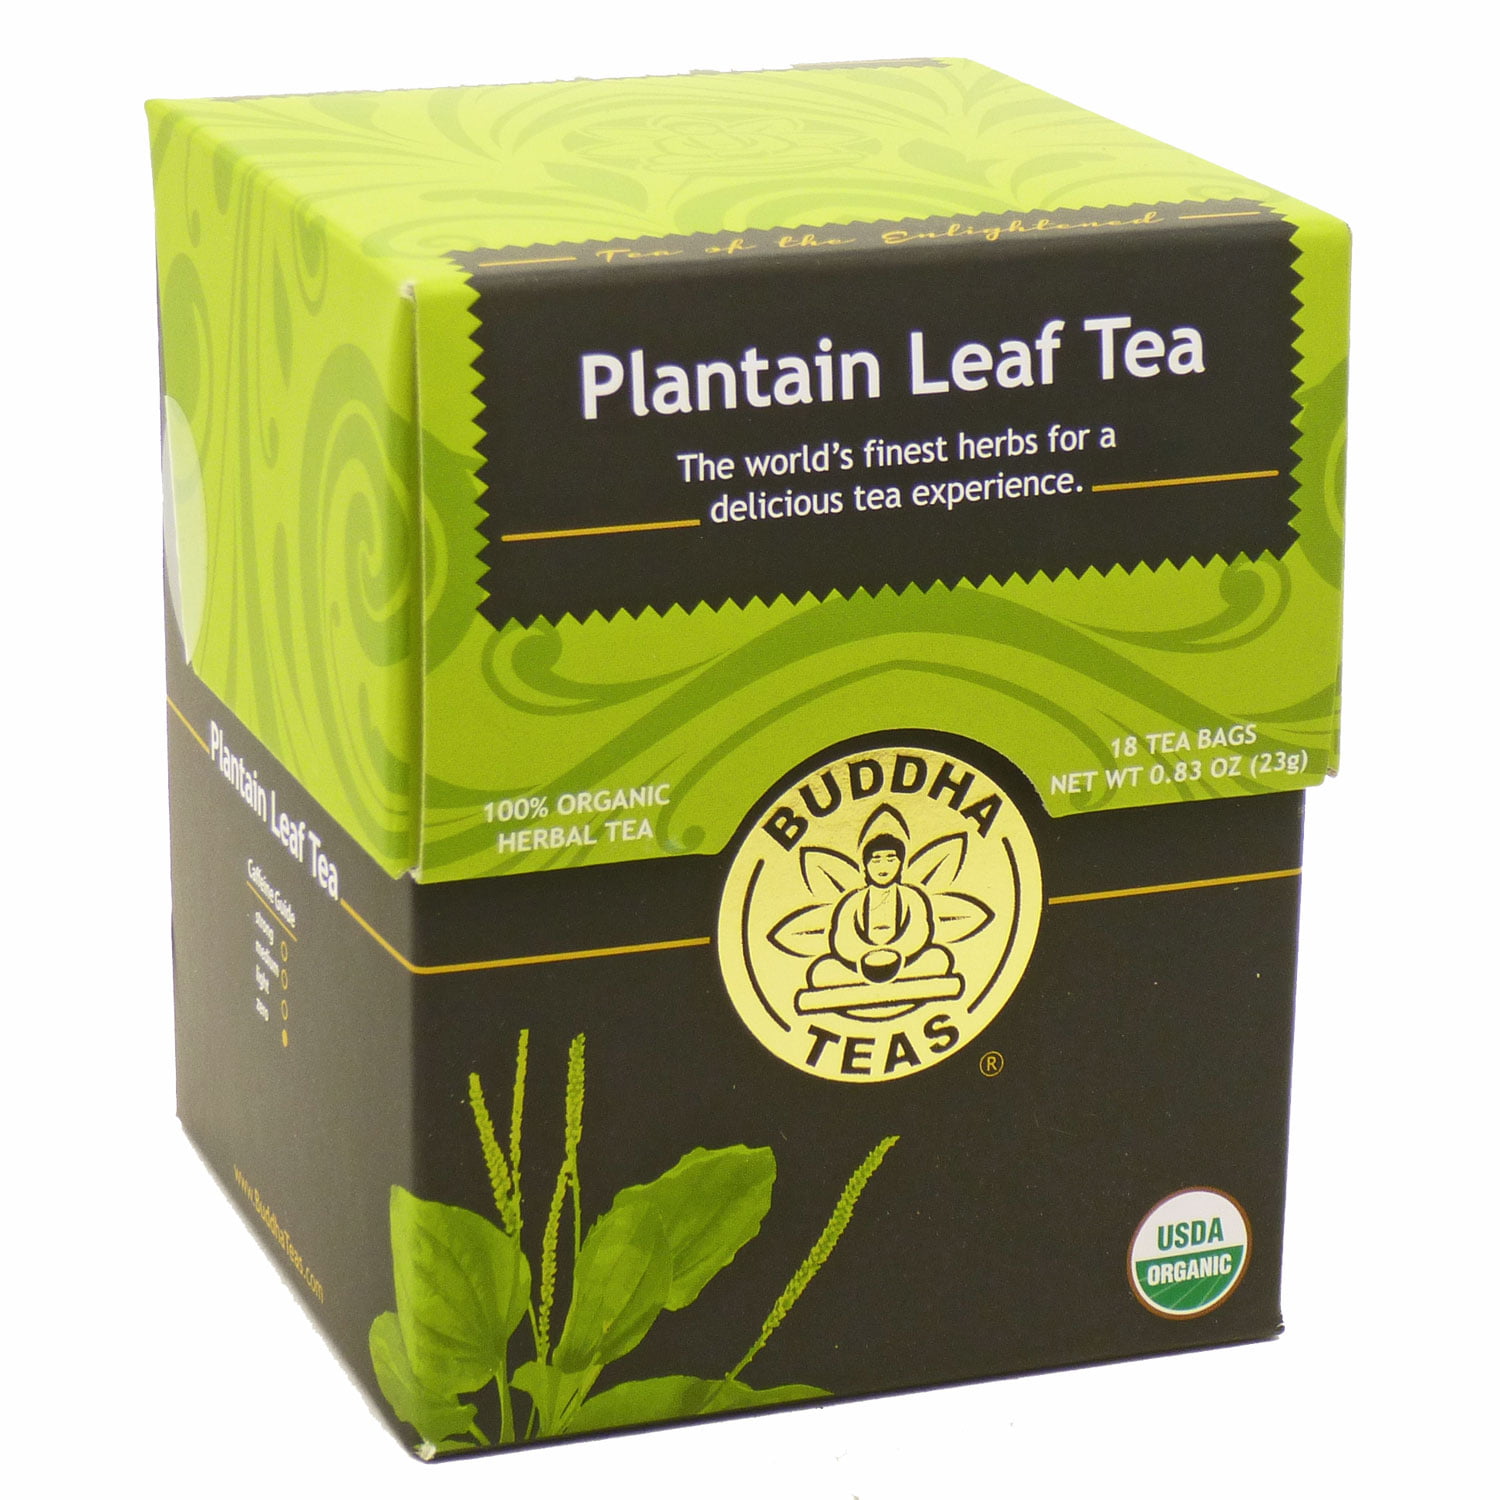 Plantain Leaf Tea by Budda Teas 18 Tea Bags